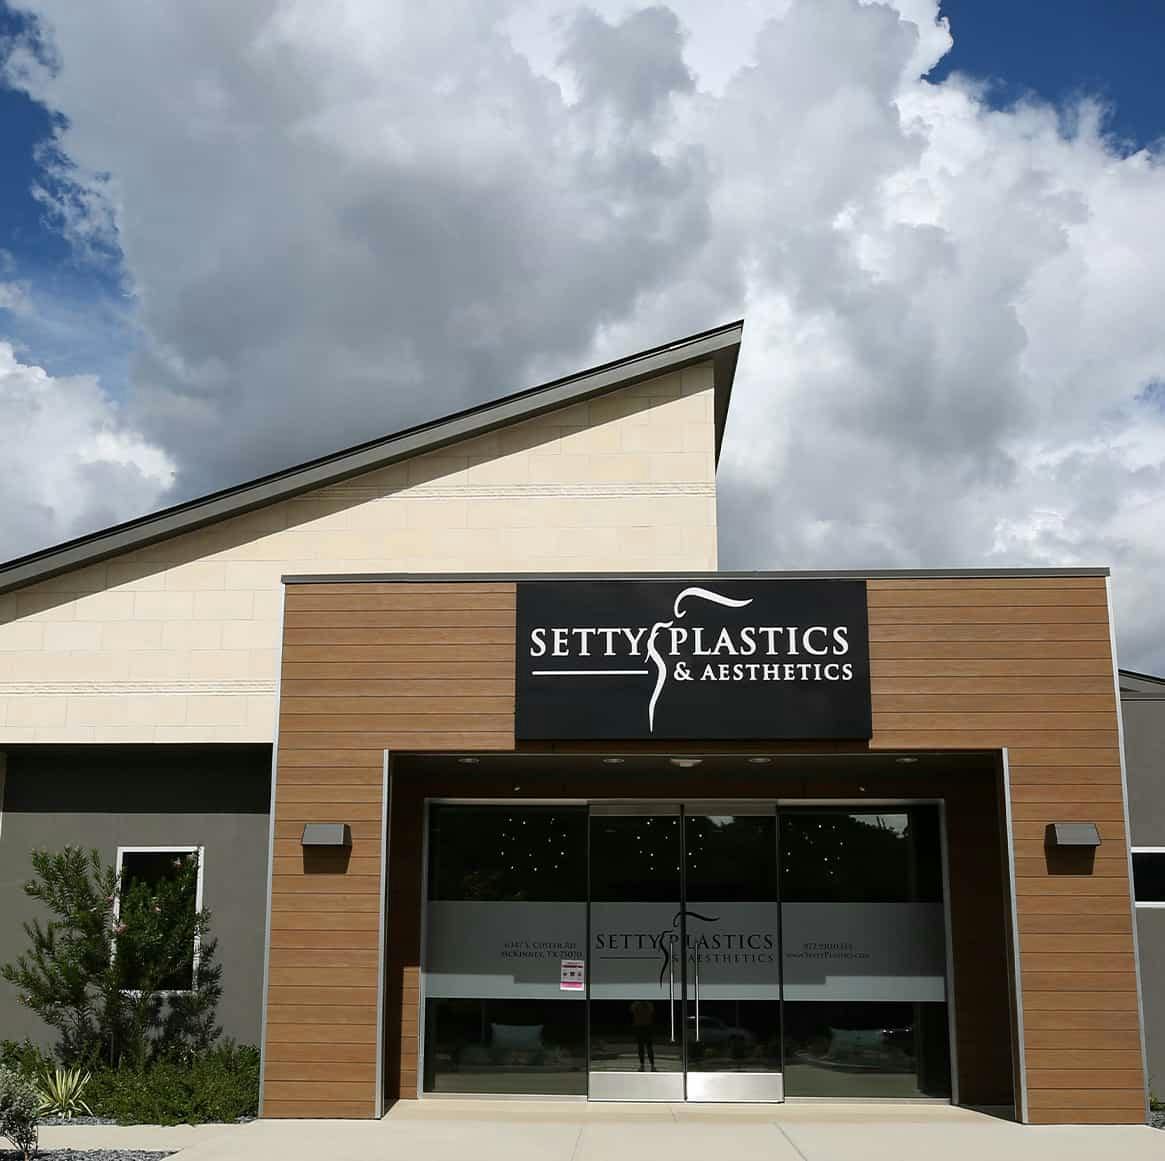 Setty Plastics & Aesthetics building in Texas